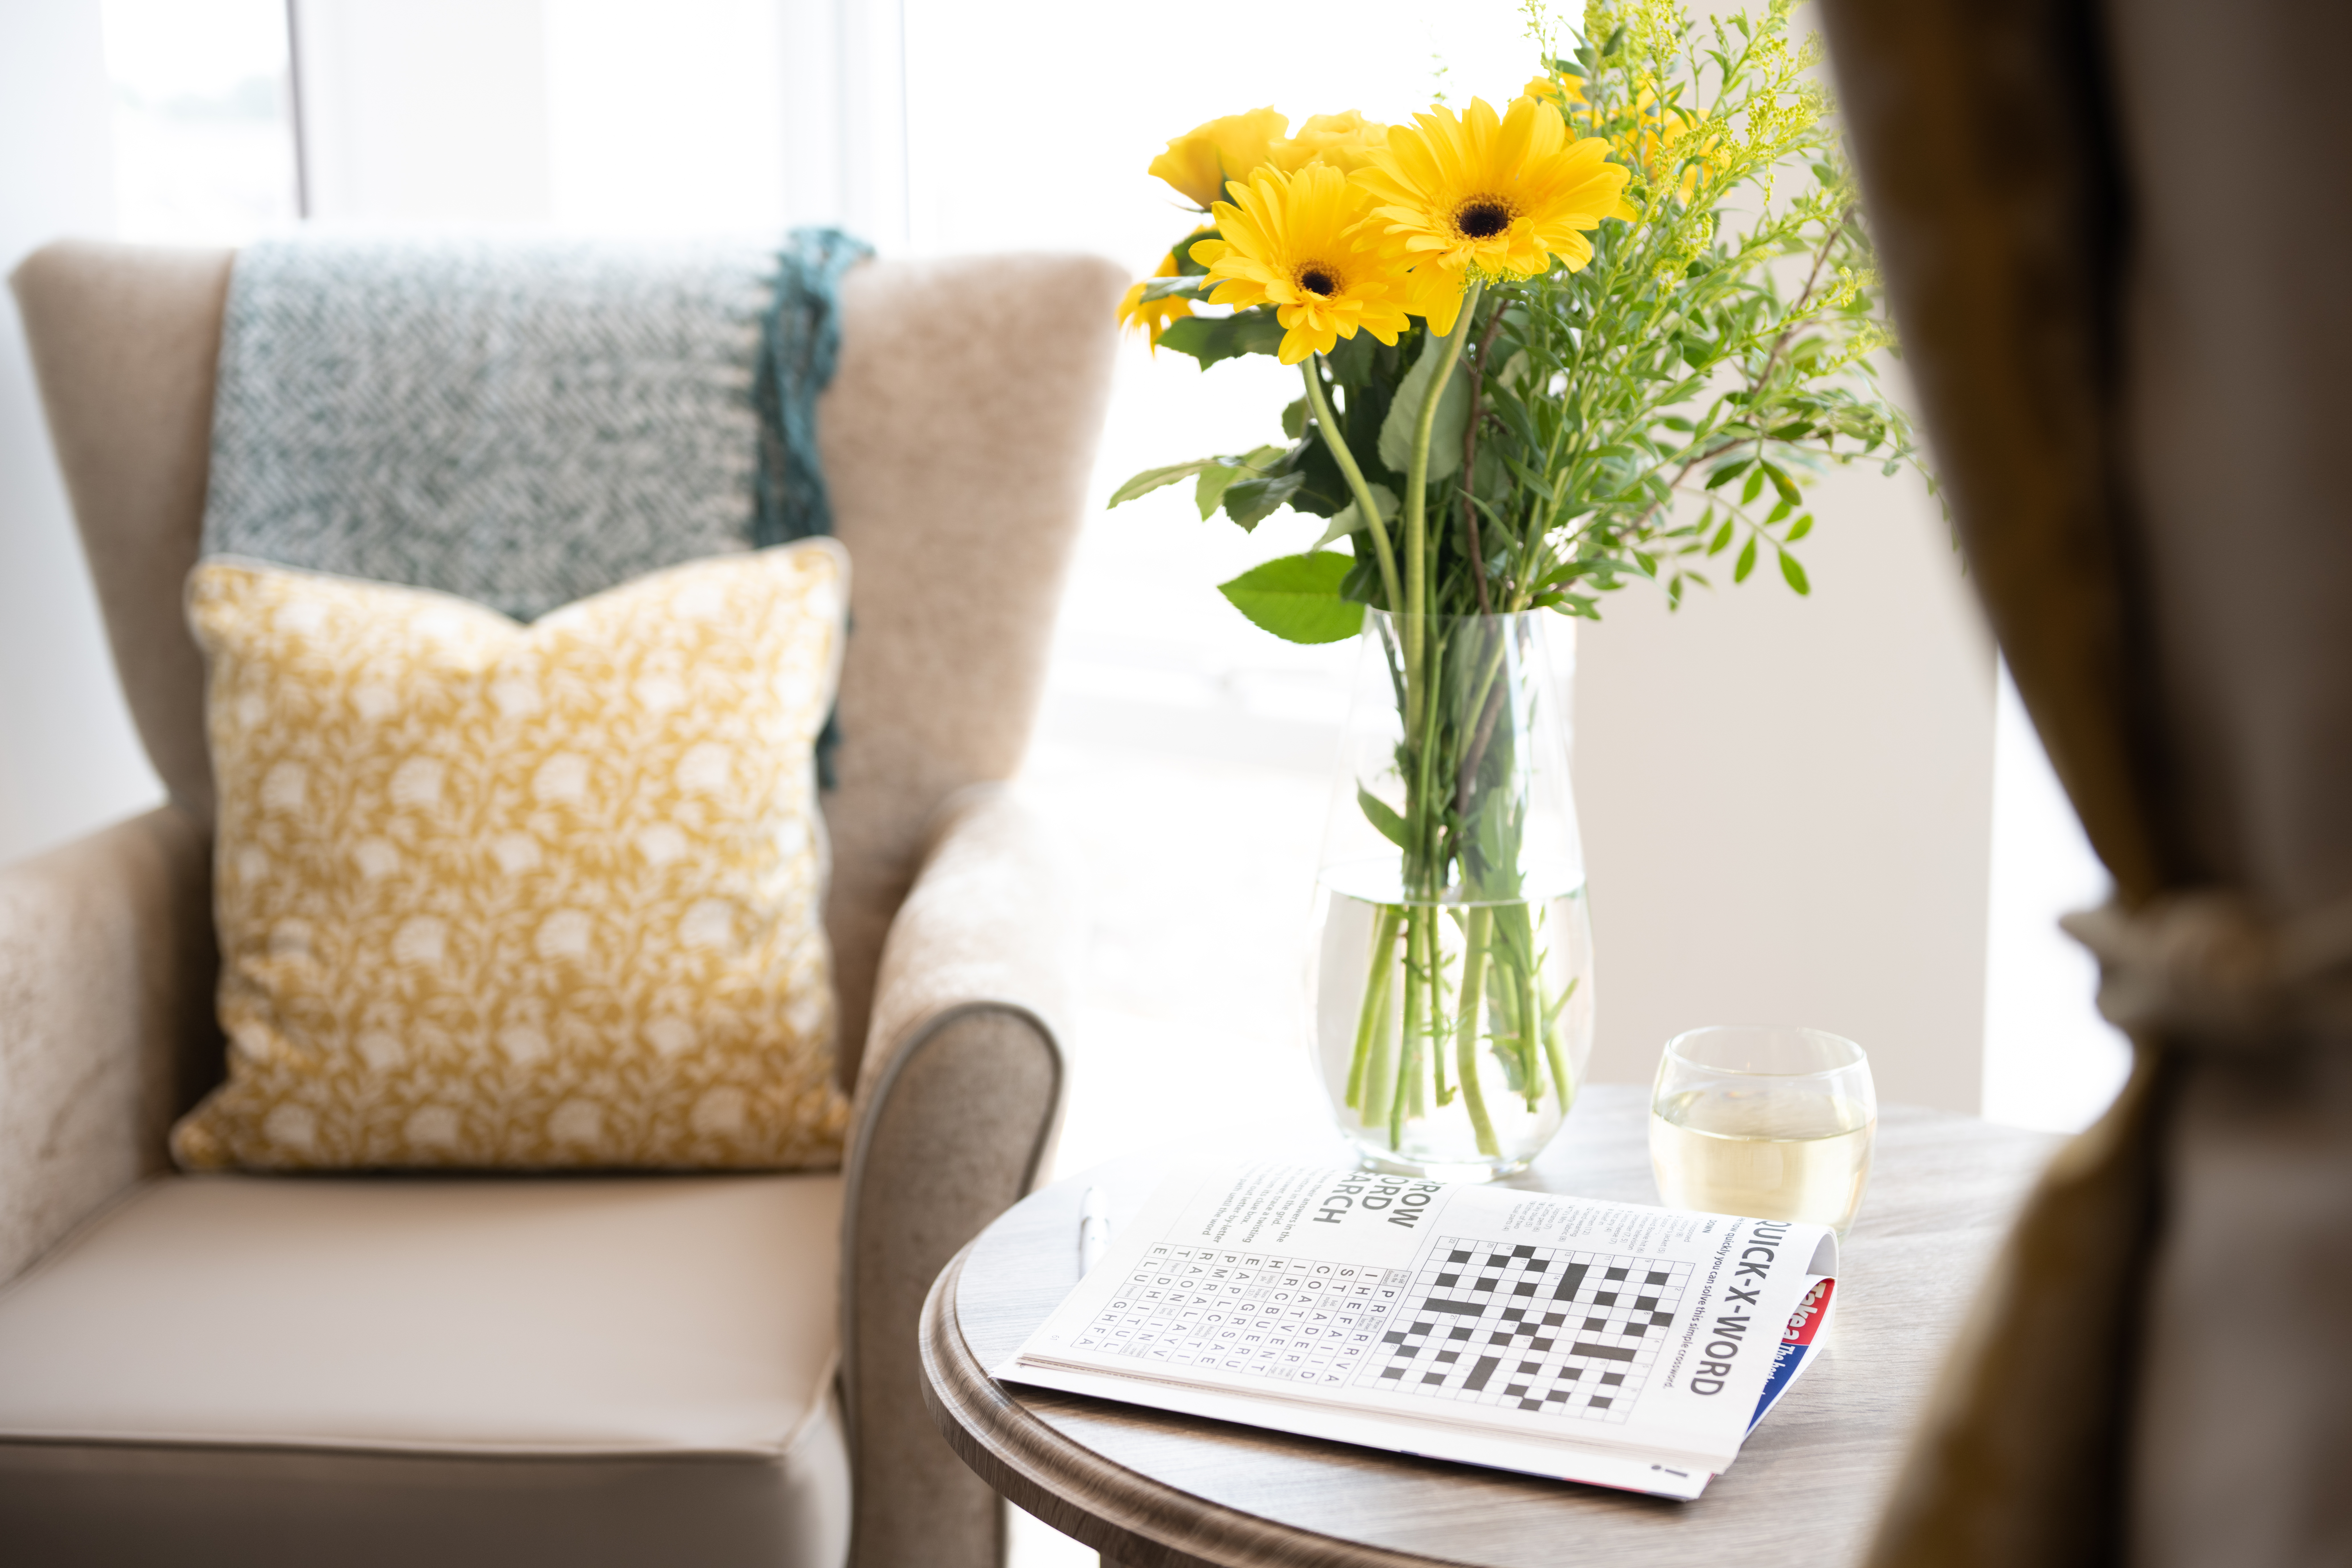 Bedroom Amenities- Crossword and Flowers on Table